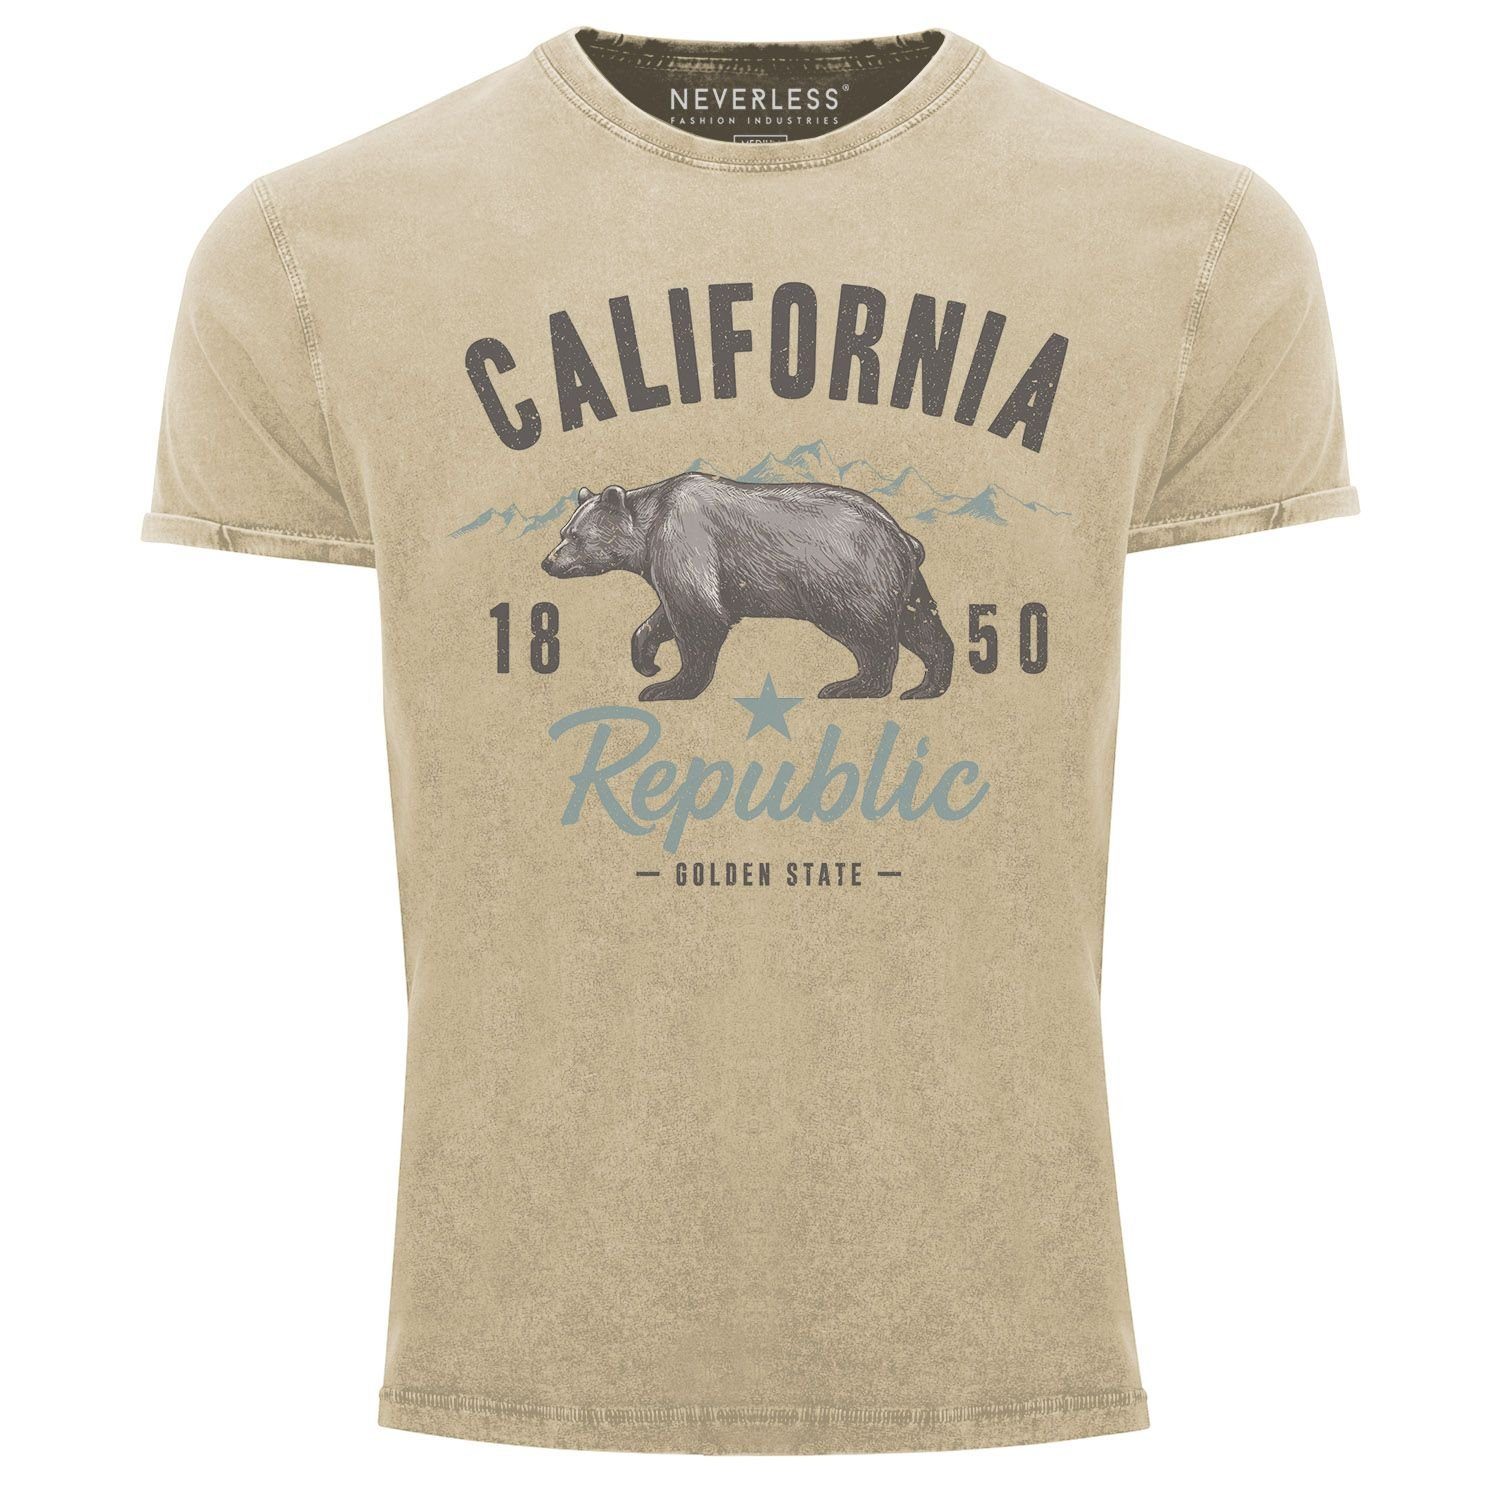 Neverless Print-Shirt Golden Summer Sommer Look Neverless® Shirt State Herren mit Aufdruck Bär natur Vintage T-Shirt Printshirt Print USA Used California Bear